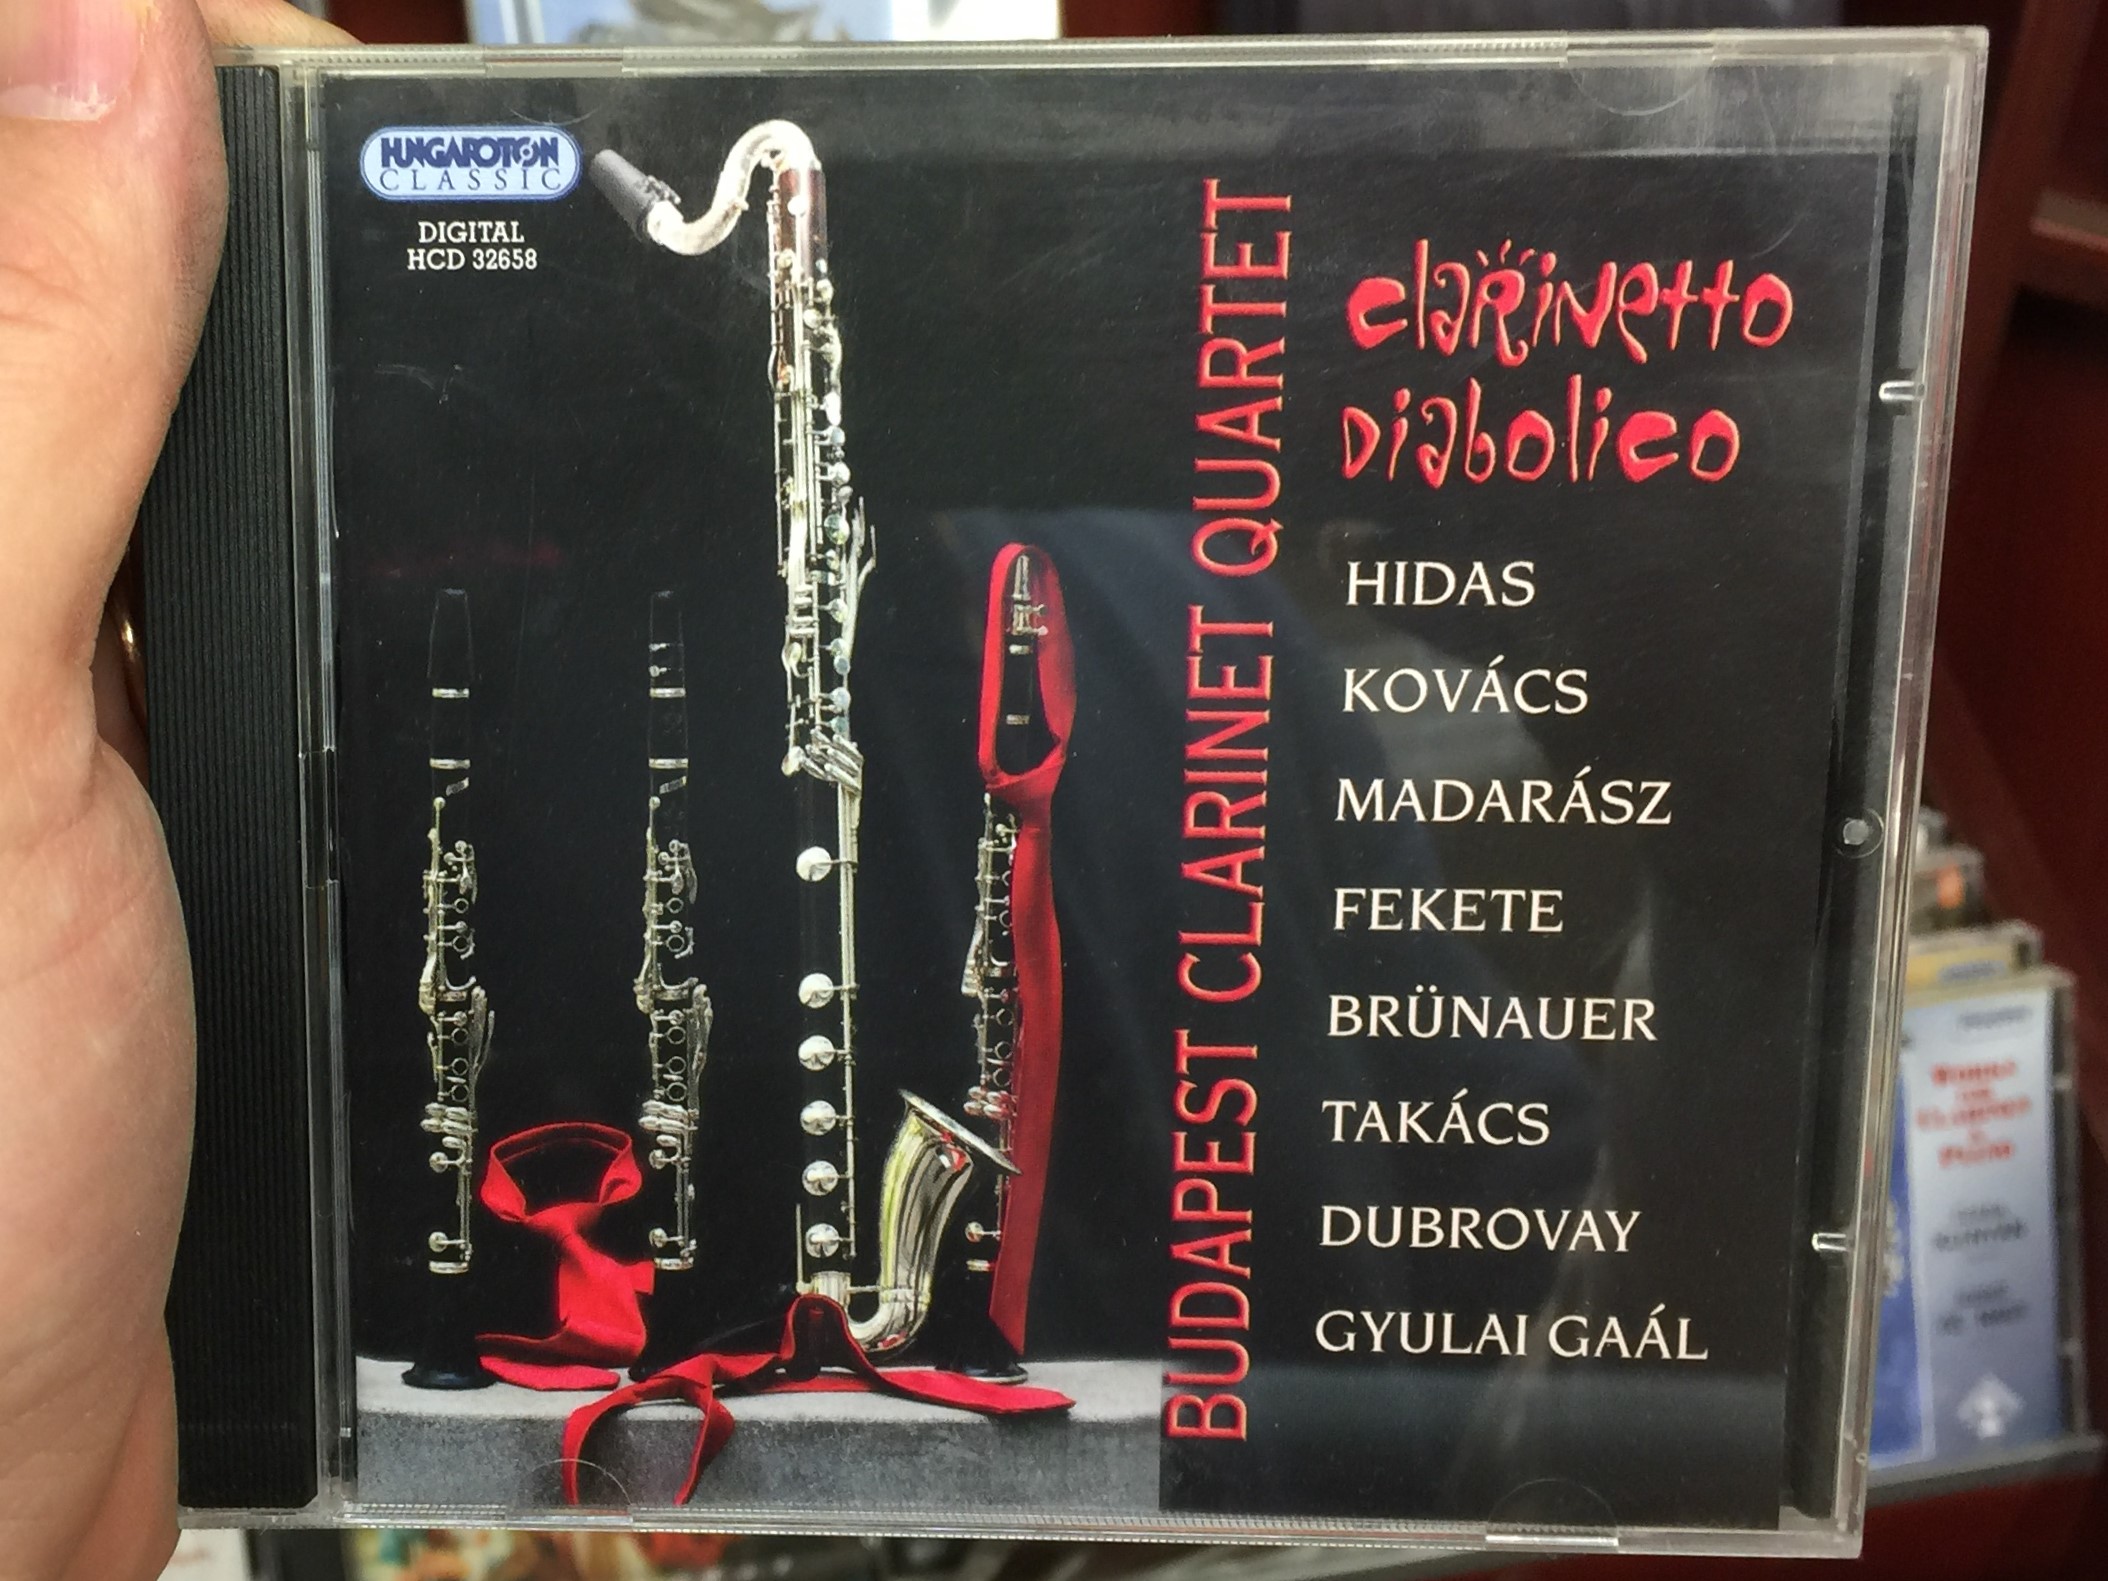 budapest-clarinet-quartet-clarinetto-diabolieo-hidas-kovacs-madarasz-fekete-brunauer-takacs-dubrovay-gyulai-gaal-hungaroton-classic-audio-cd-2010-stereo-hcd-32658-1-.jpg